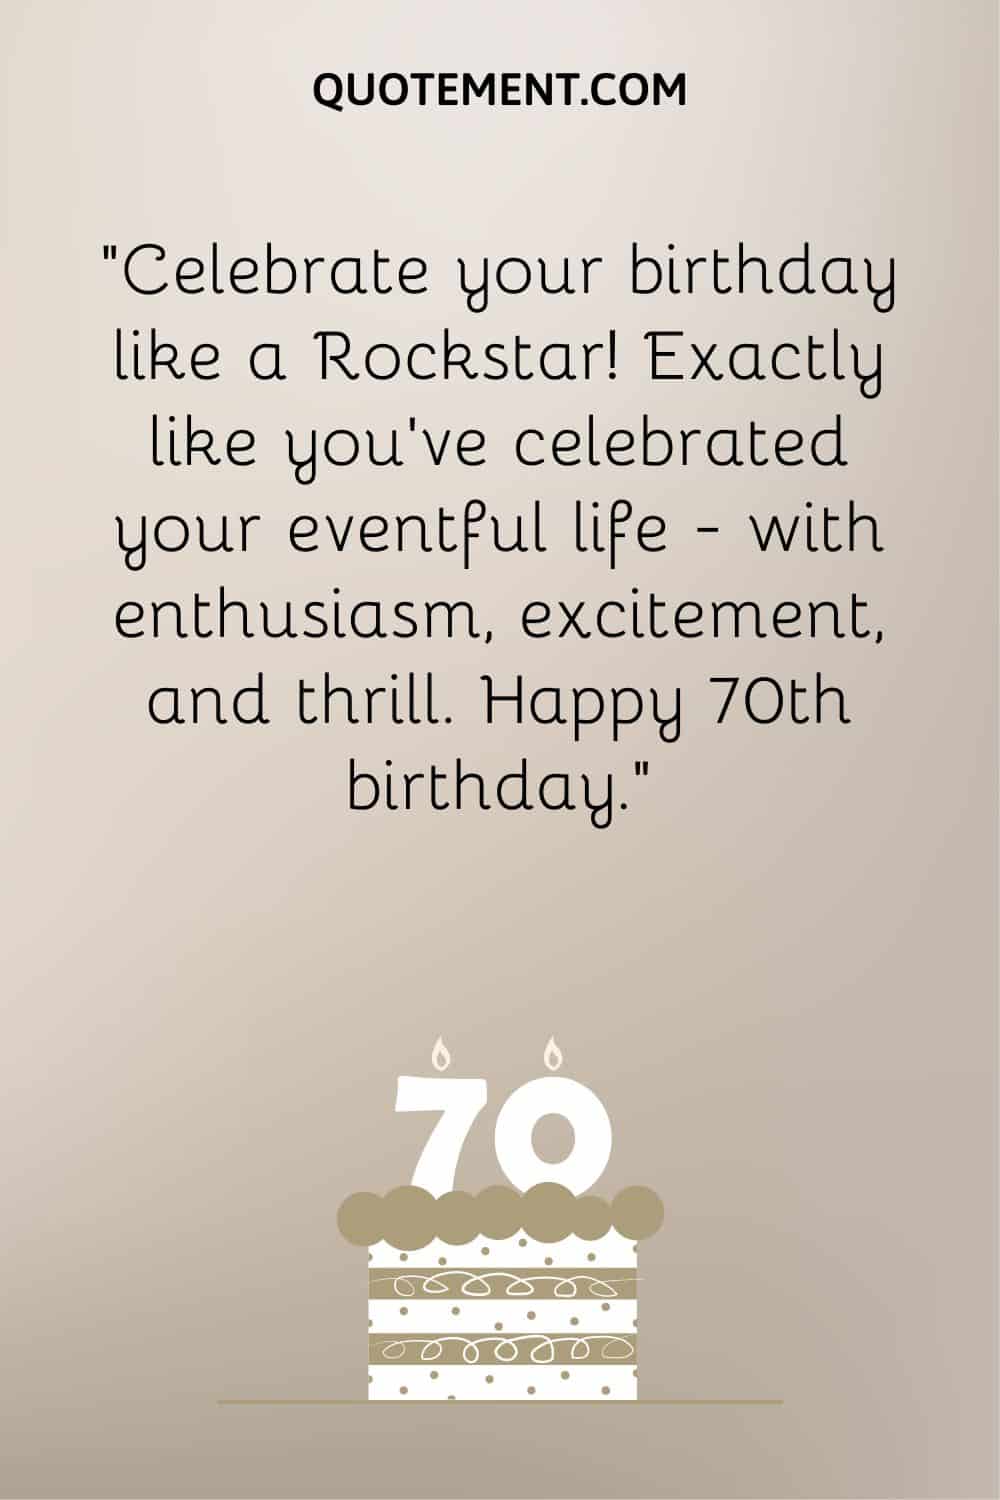 70th birthday quotes